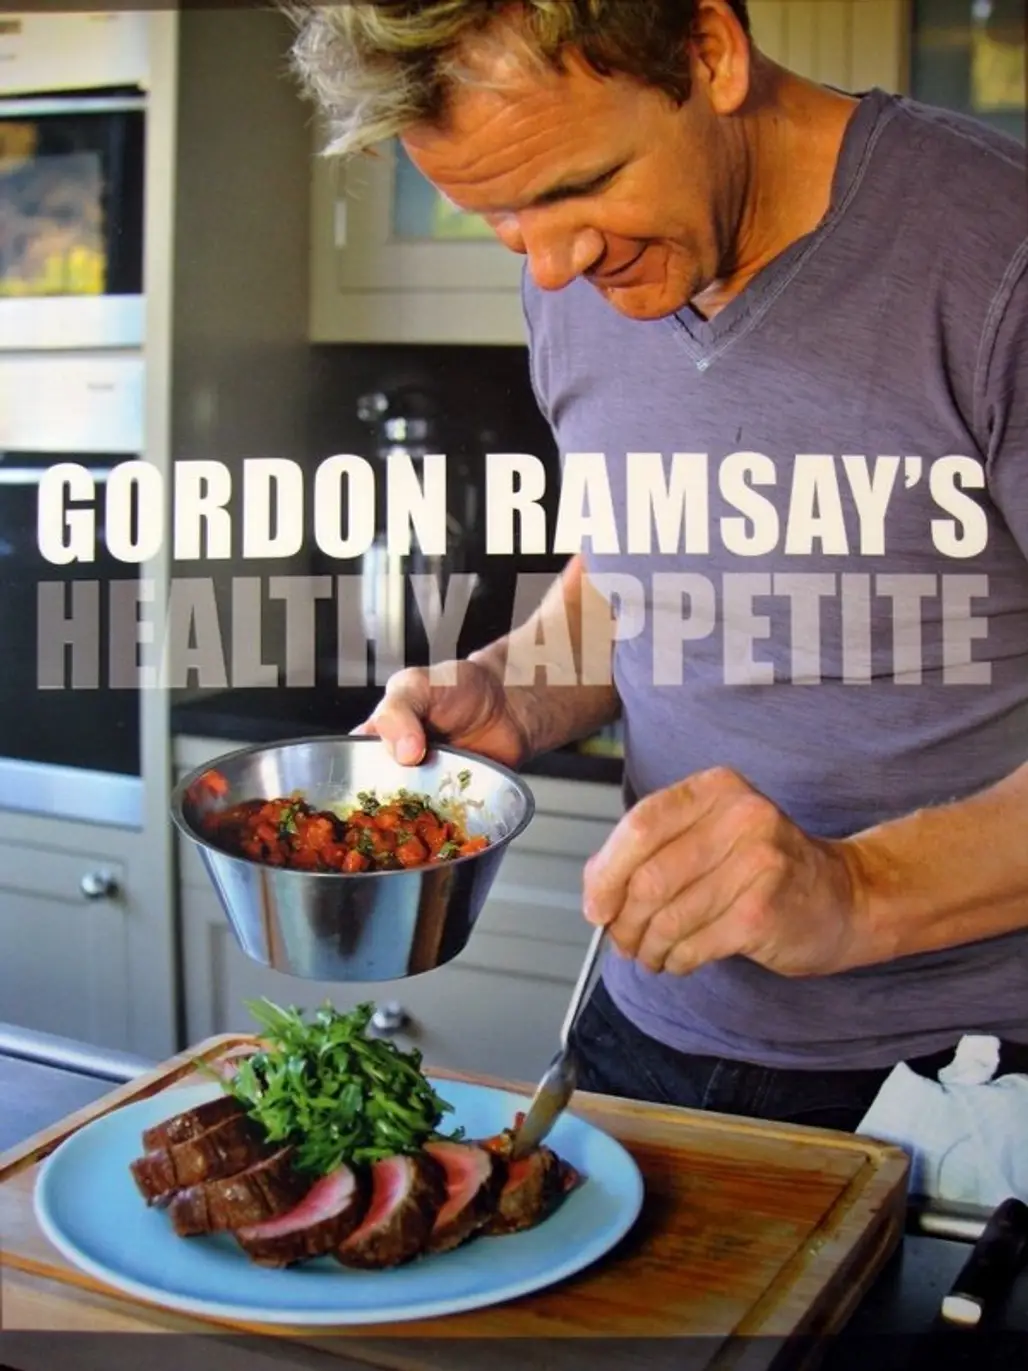 Healthy Appetite by Gordon Ramsay